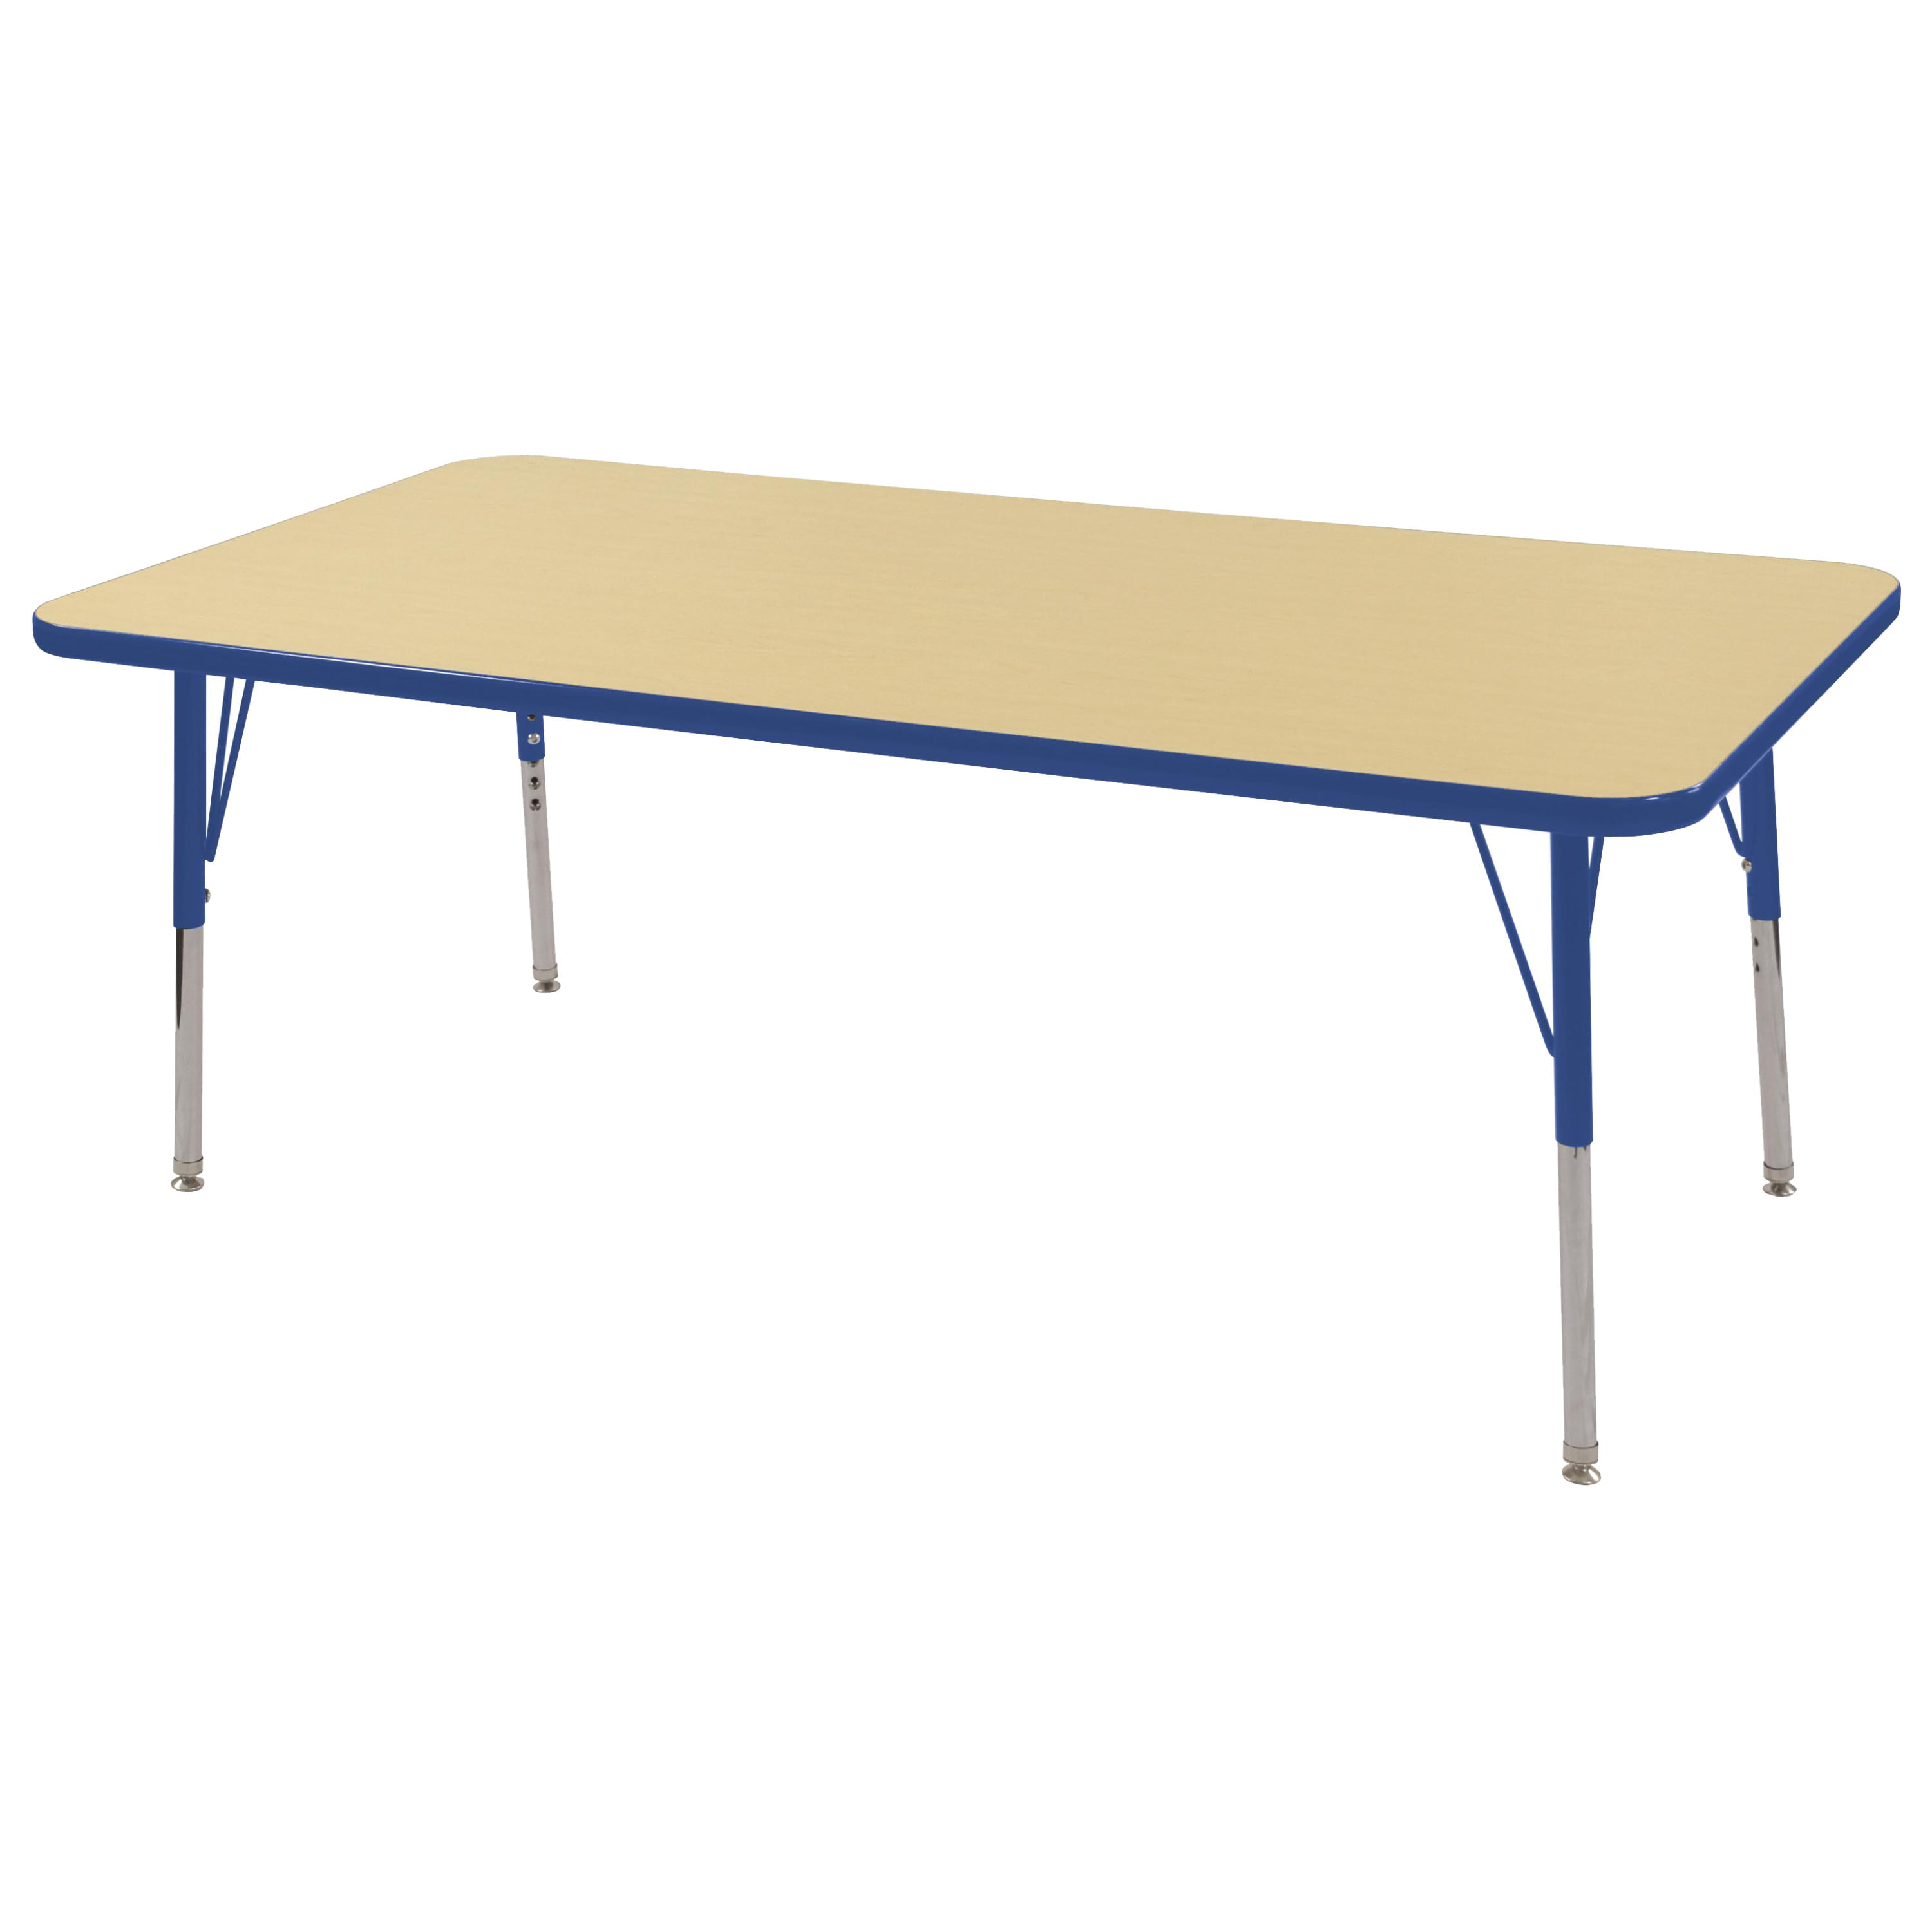 Adjustable Height 15-23 inch Maple/Blue ECR4Kids Everyday T-Mold 30 x 60 Rectangular Activity School Table Toddler Legs w/Swivel Glides 